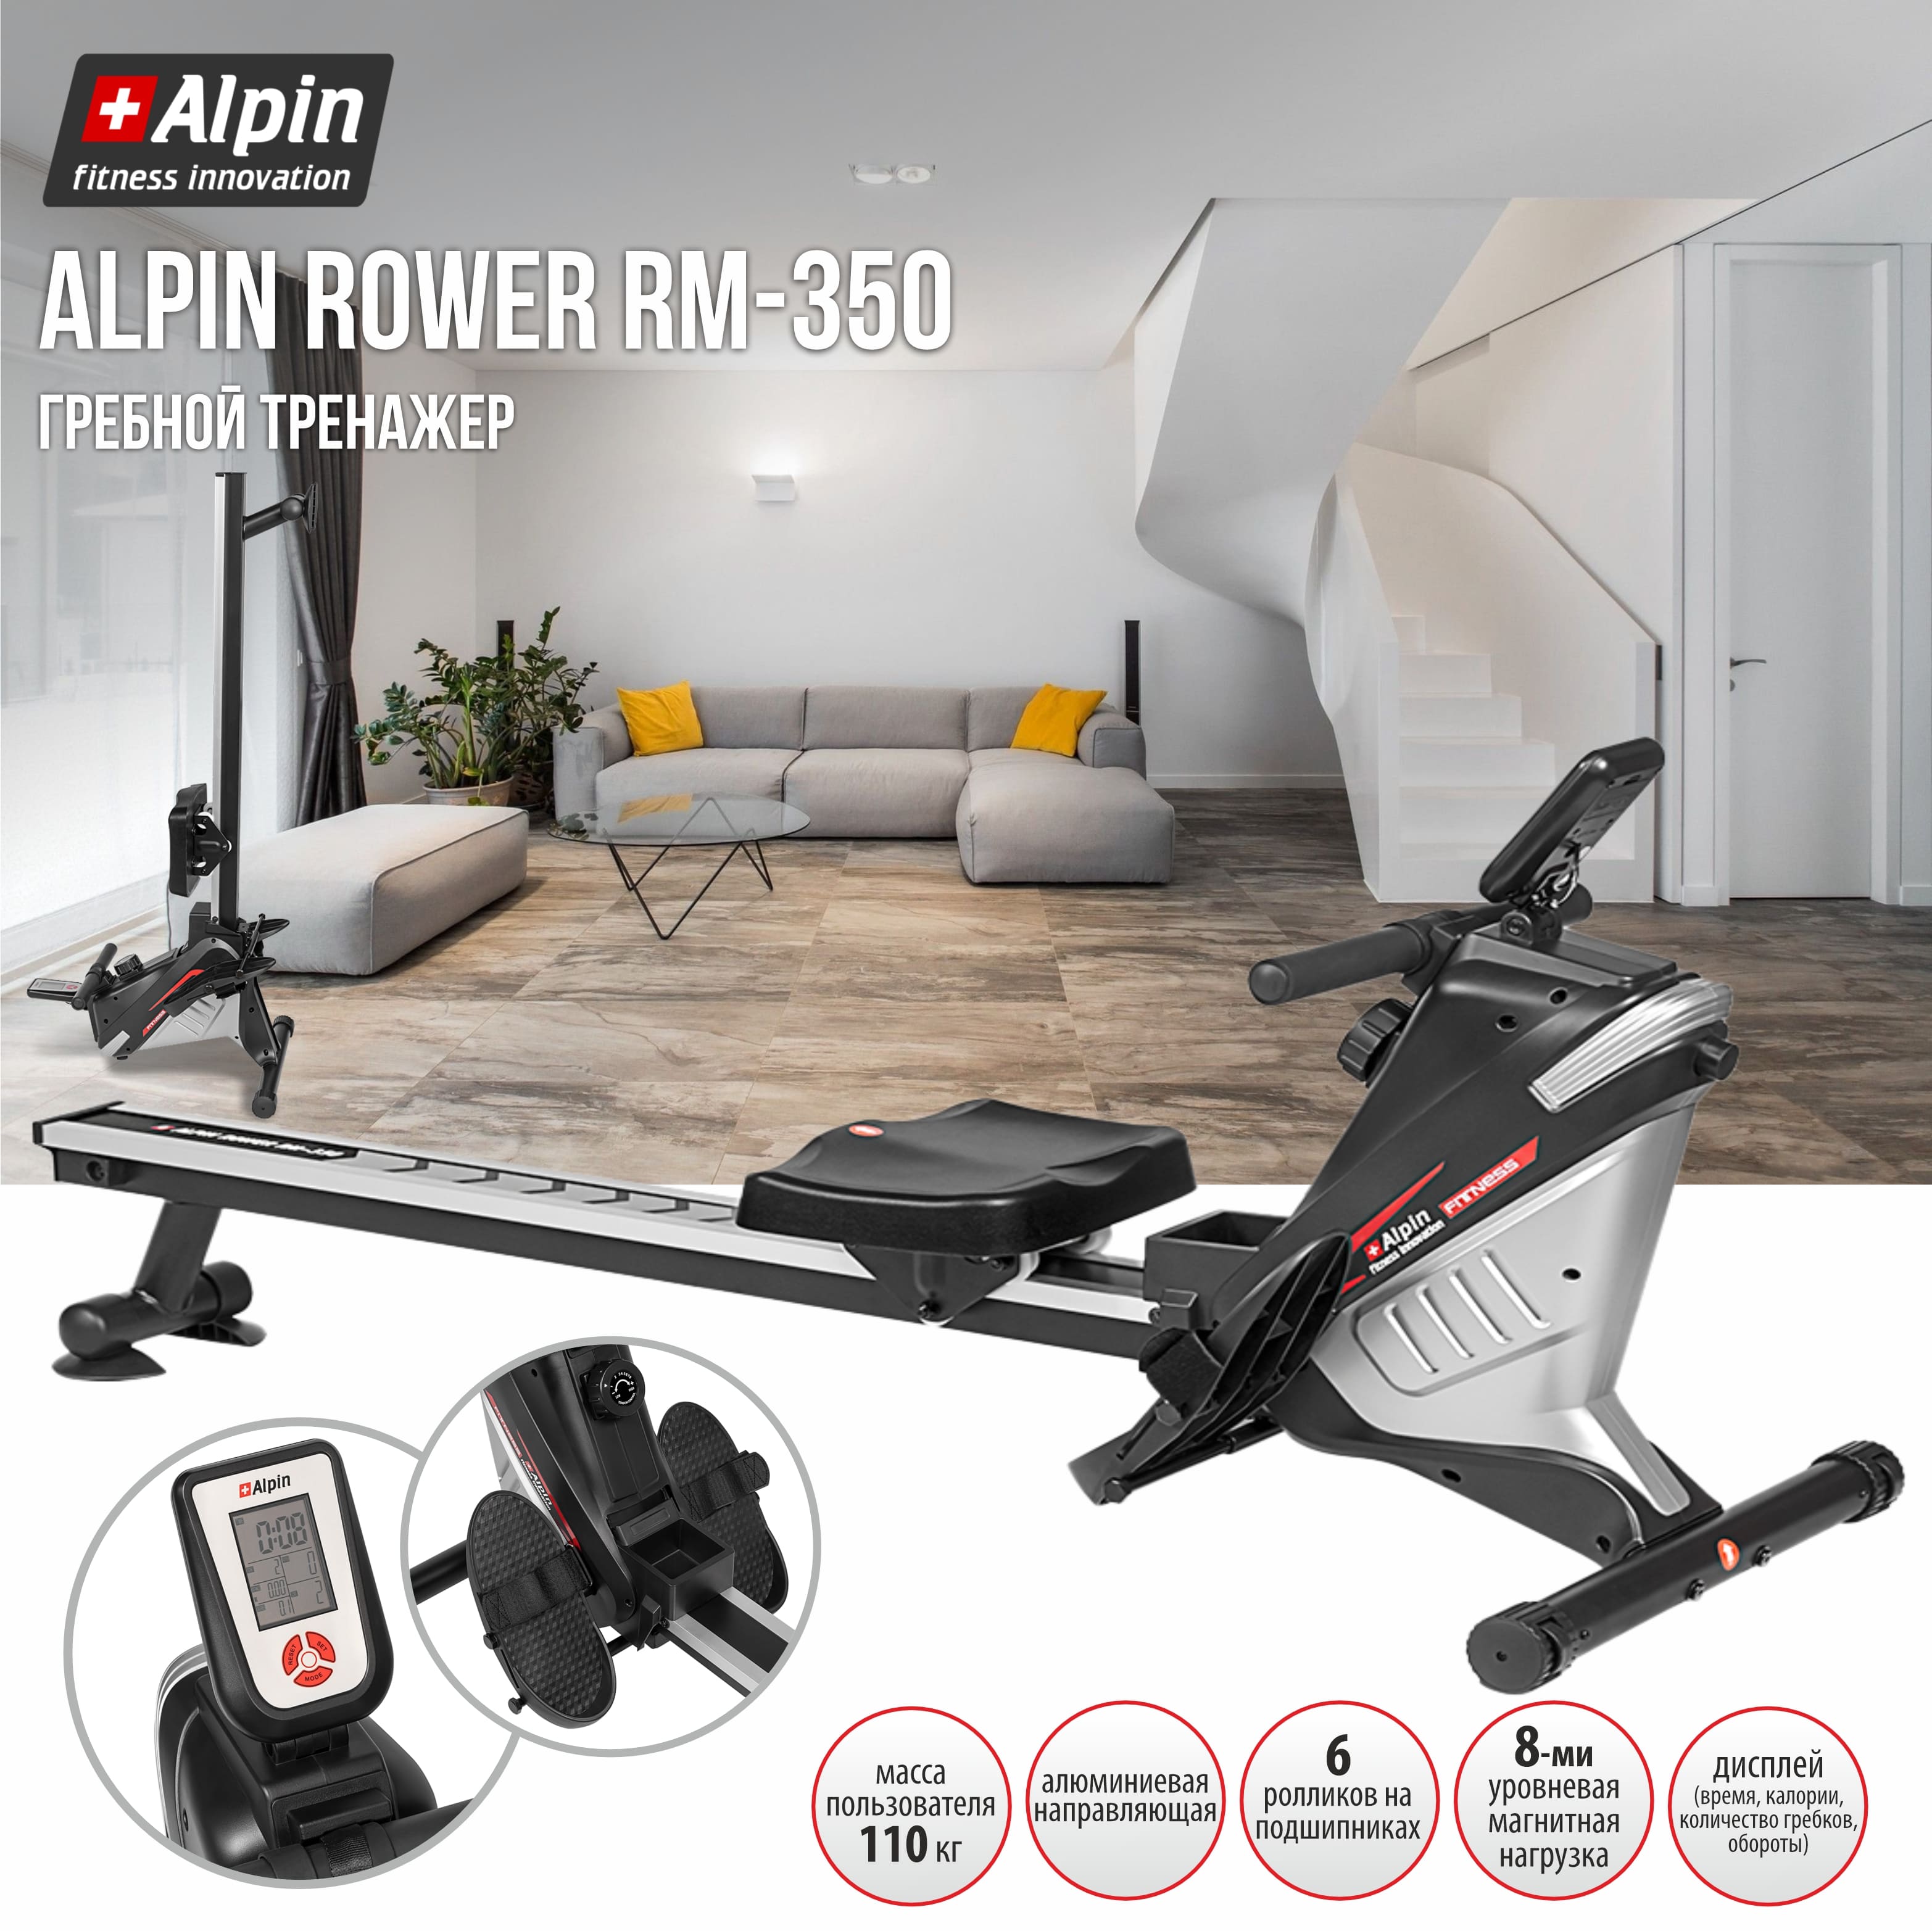 Alpin Rower RM-350